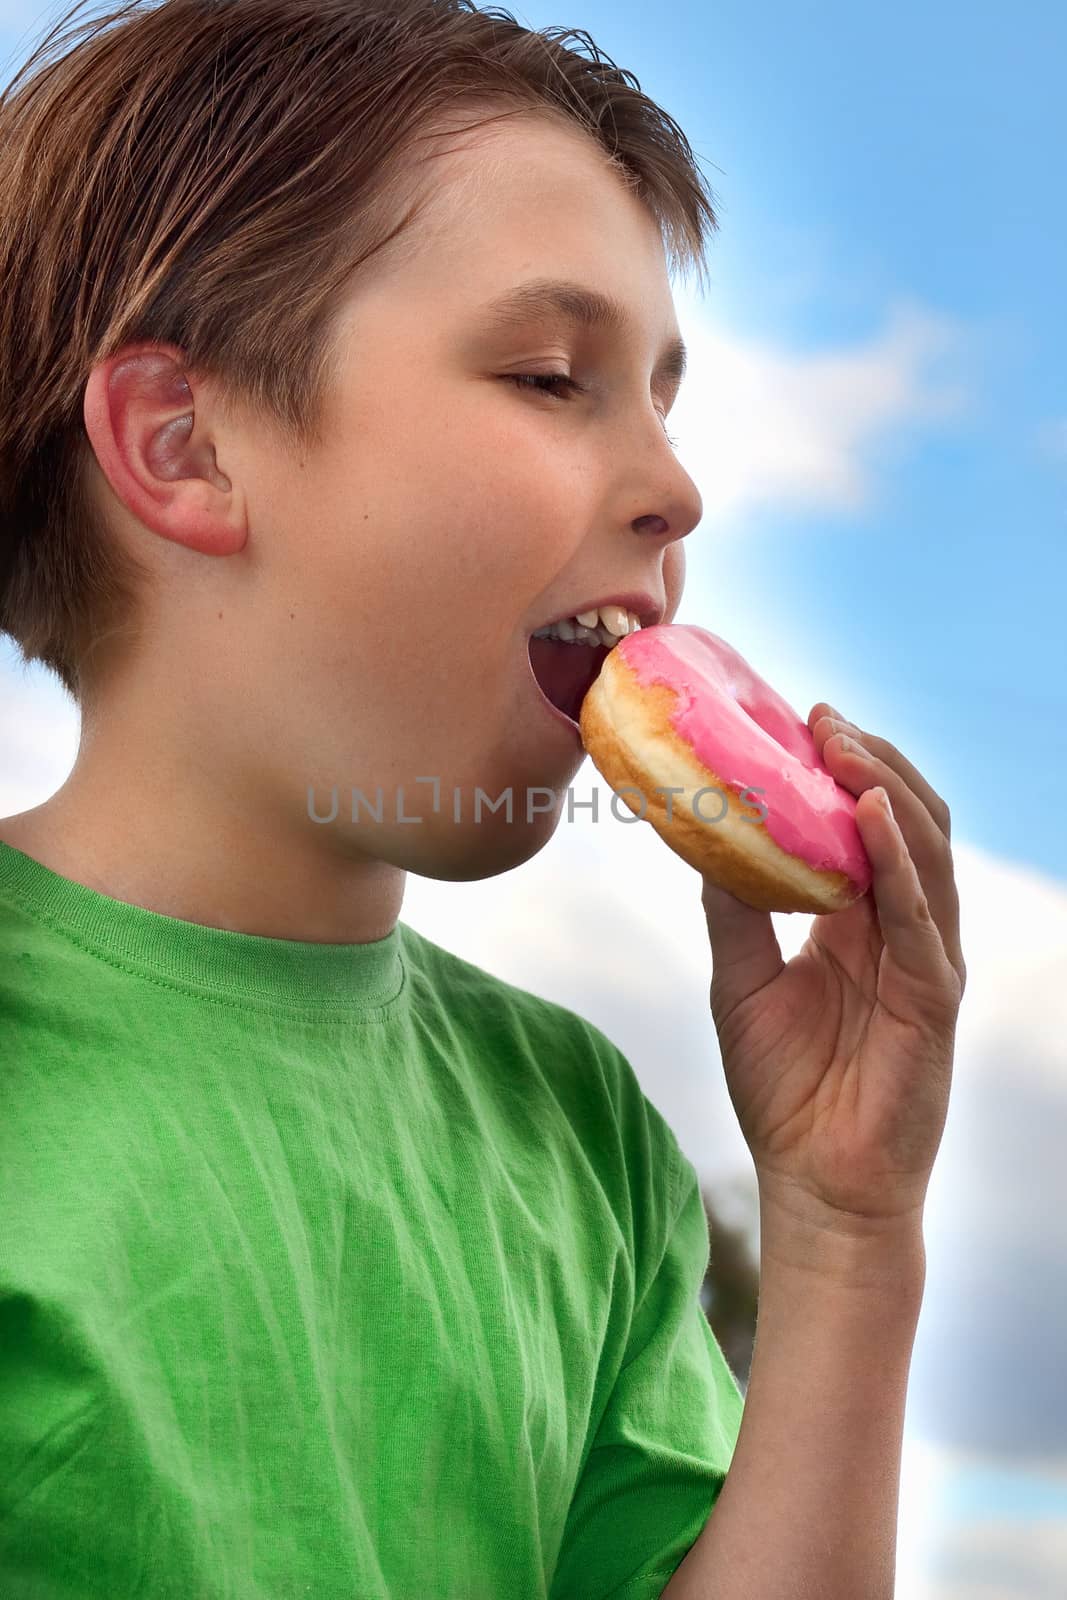 Boy biting a yummy pink iced doughnut (donut) by lovleah